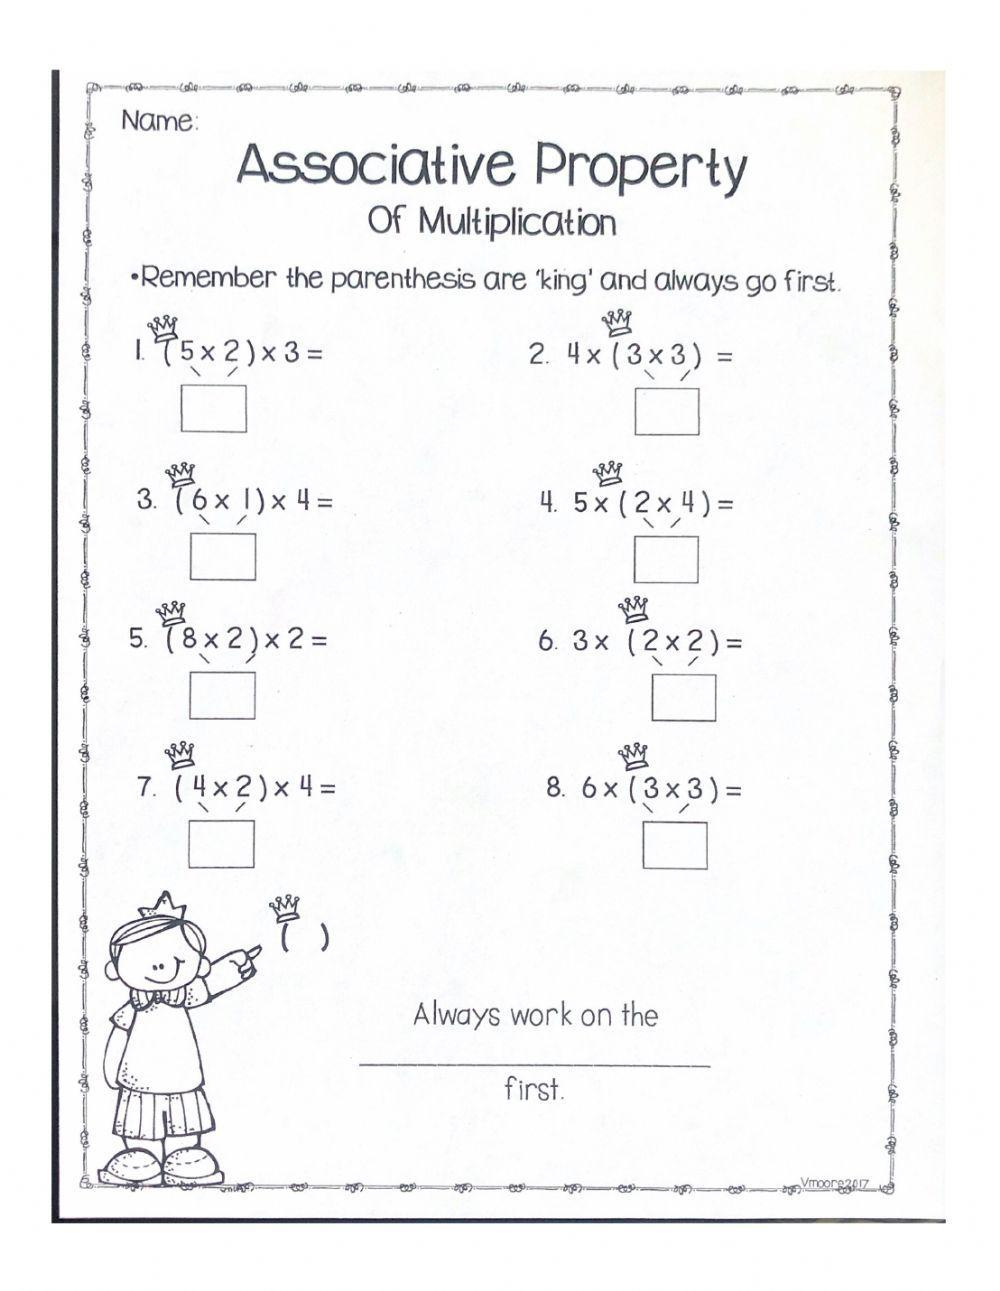 Associative Property Worksheet